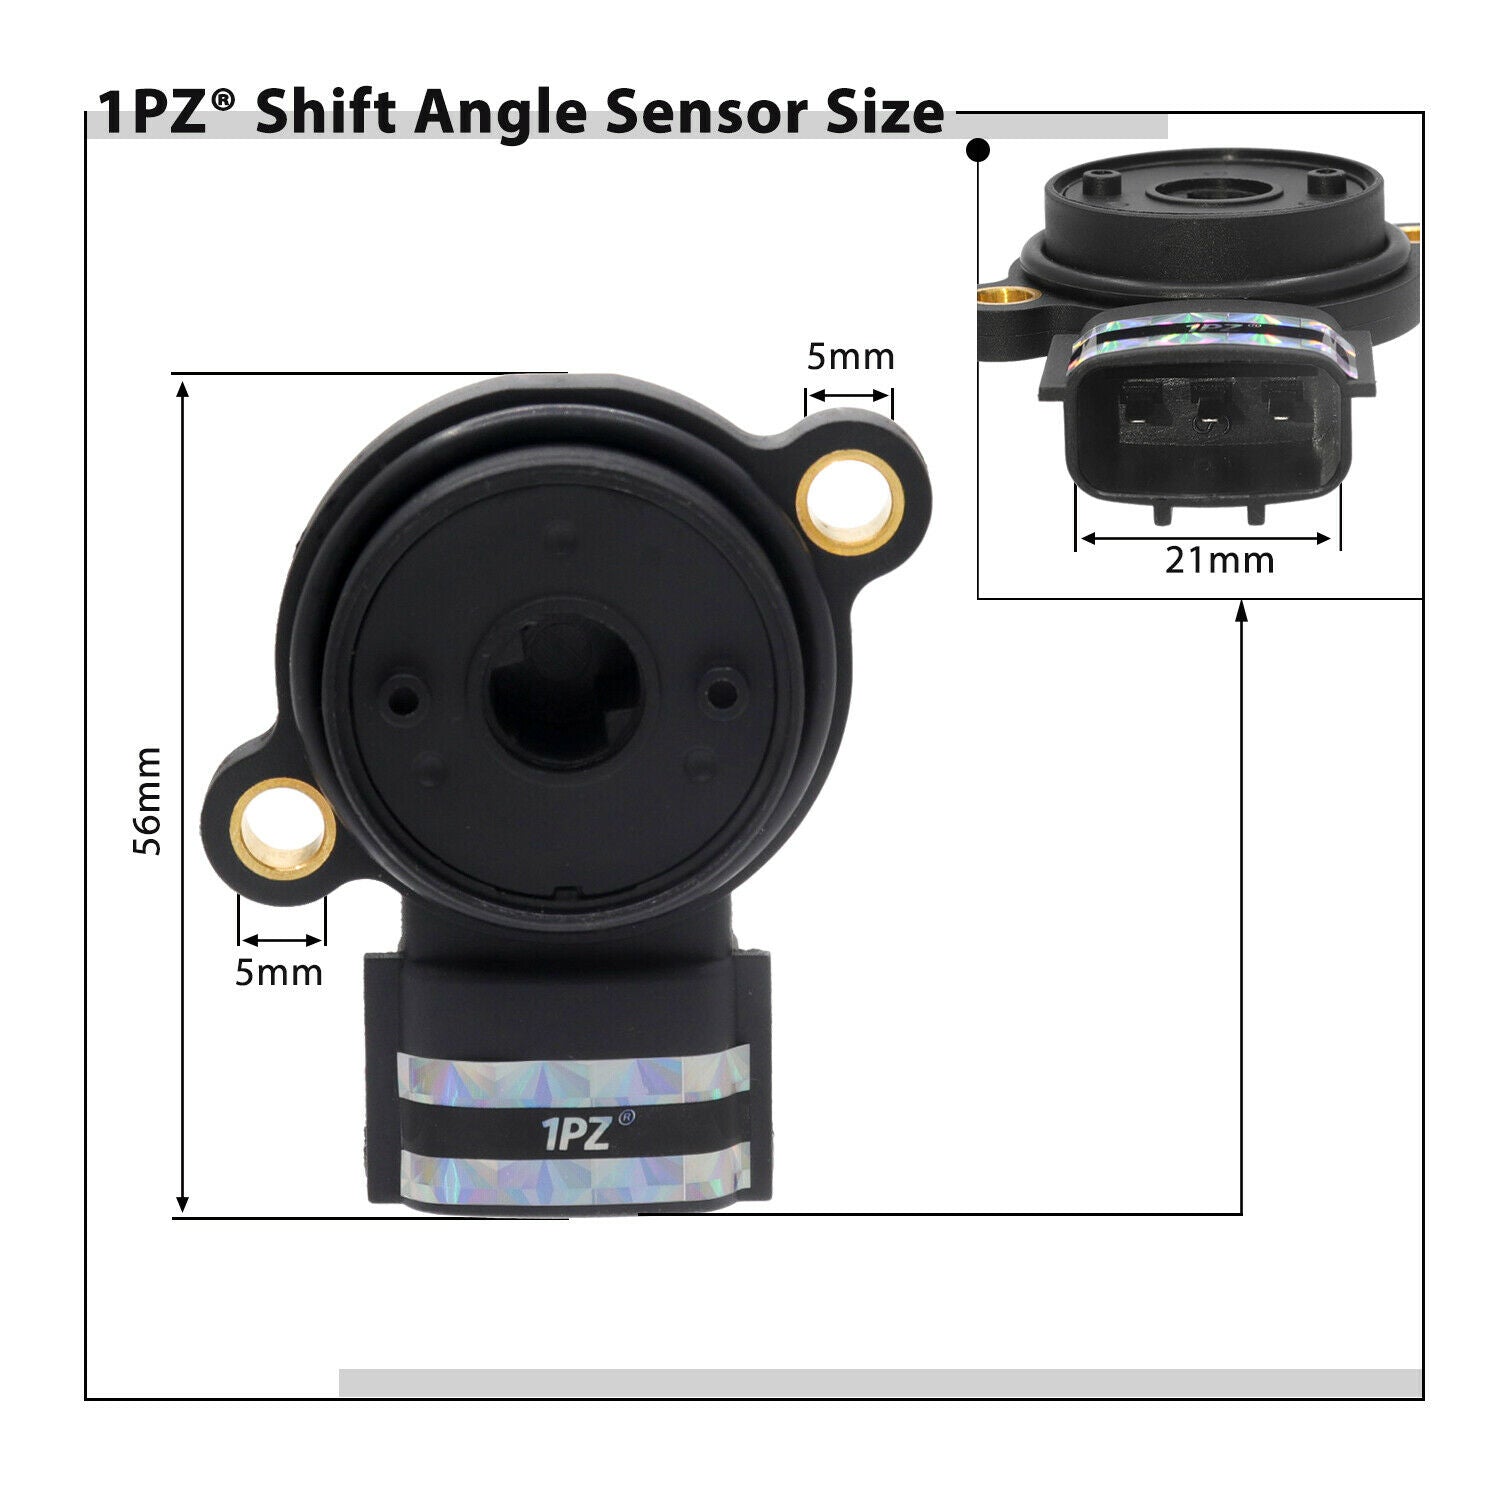 1PZ Shift Angle Sensor Replacement for Honda Foreman Rubicon 500 TRX500FA TRX500FGA TRX500FPA Rancher 400 TRX400FA TRX400FGA 06380-HN2-305